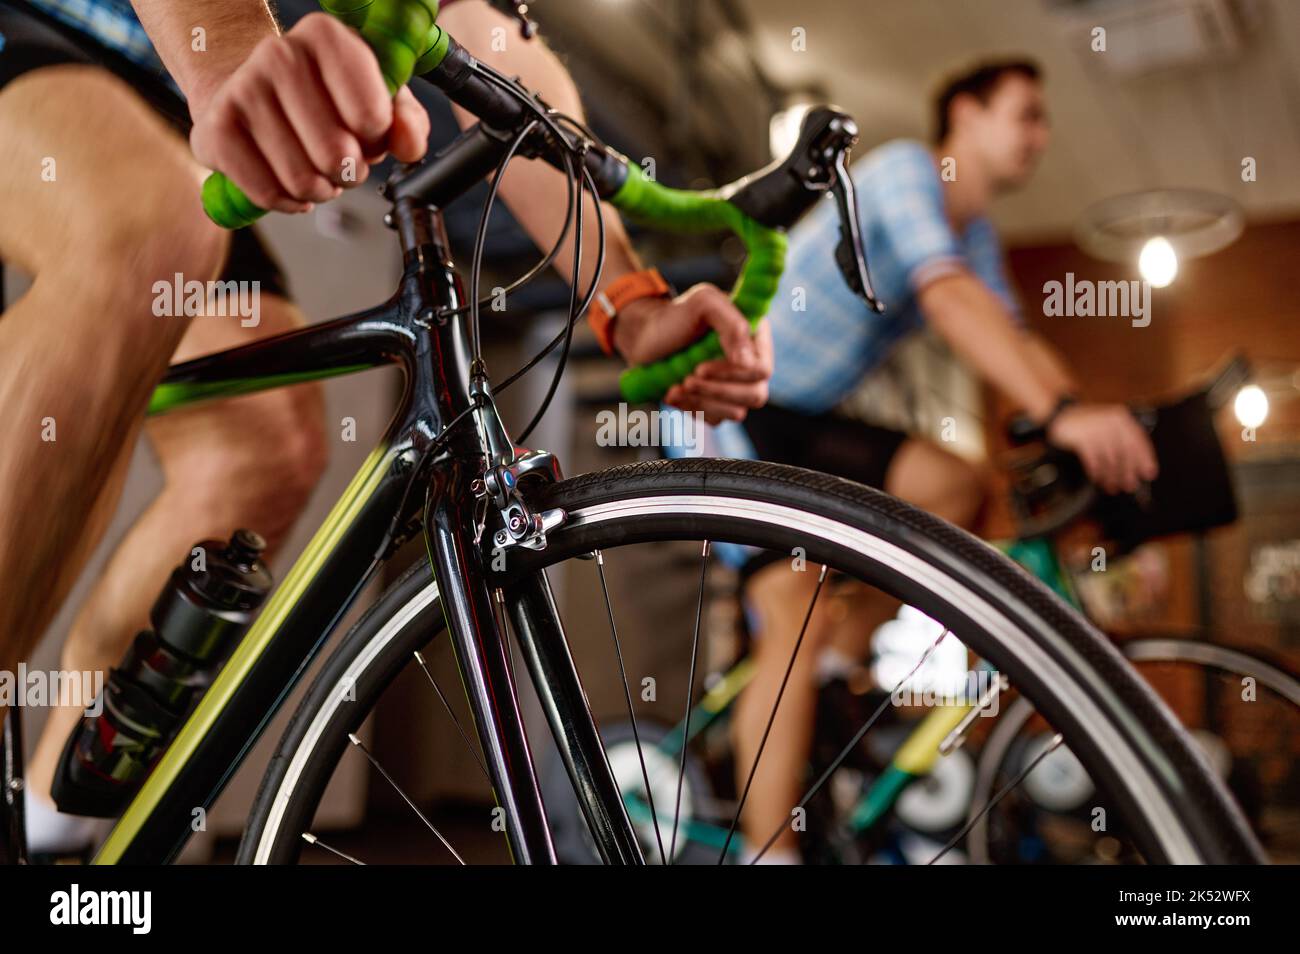 Closeup cycling training on bike at gym club Stock Photo